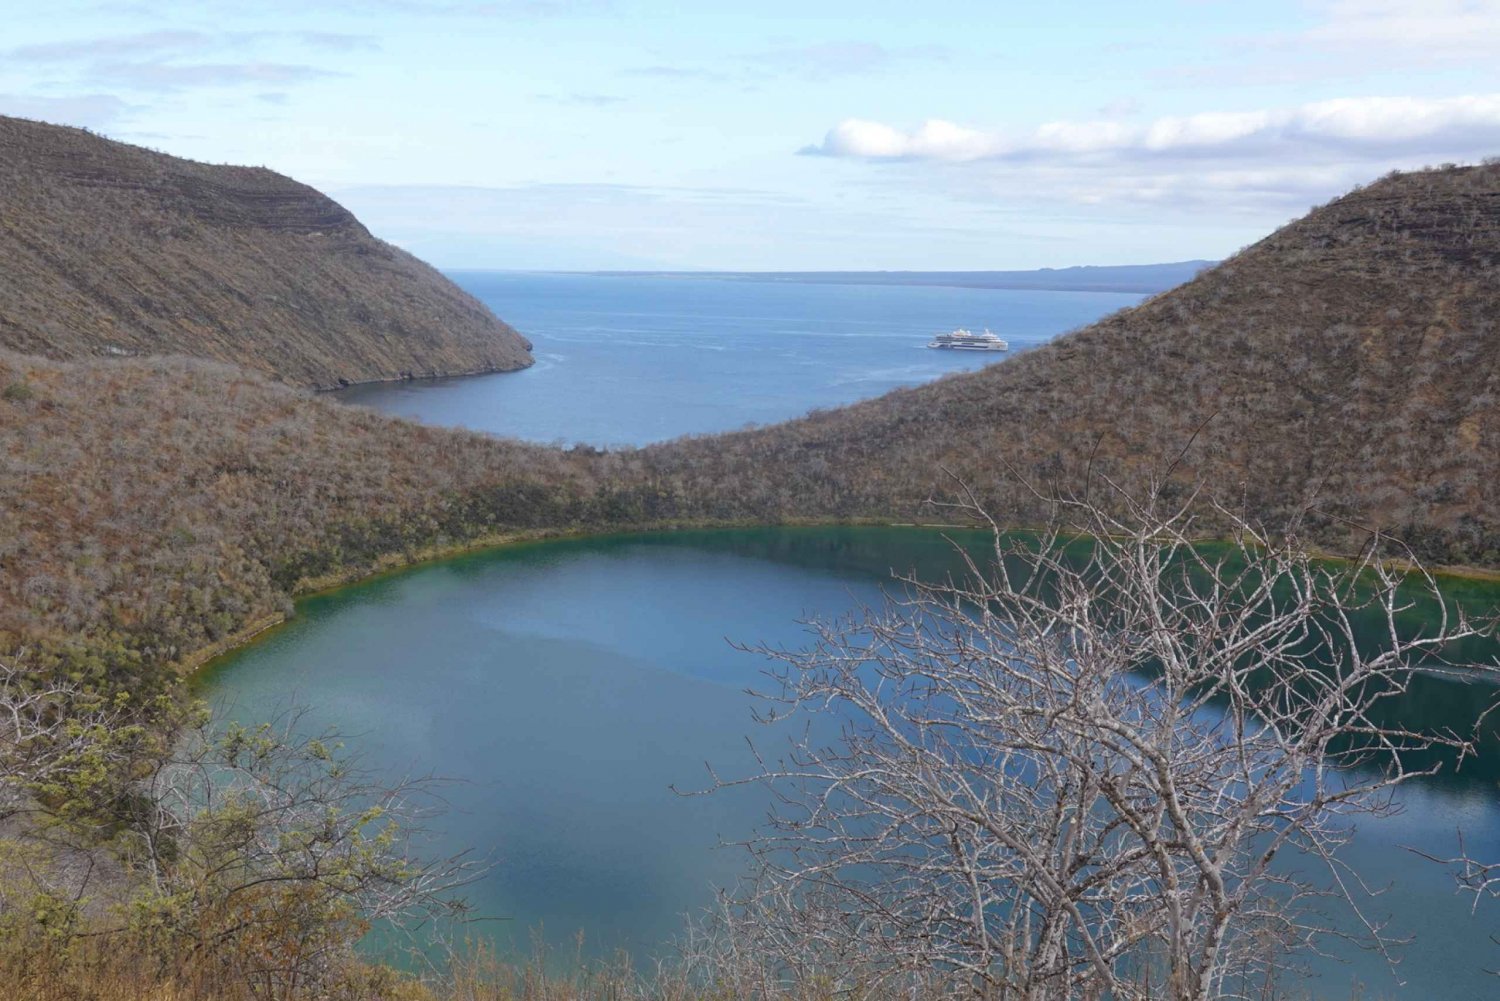 5-Day Galapagos Land Tour on Isabela: Small Group Tour